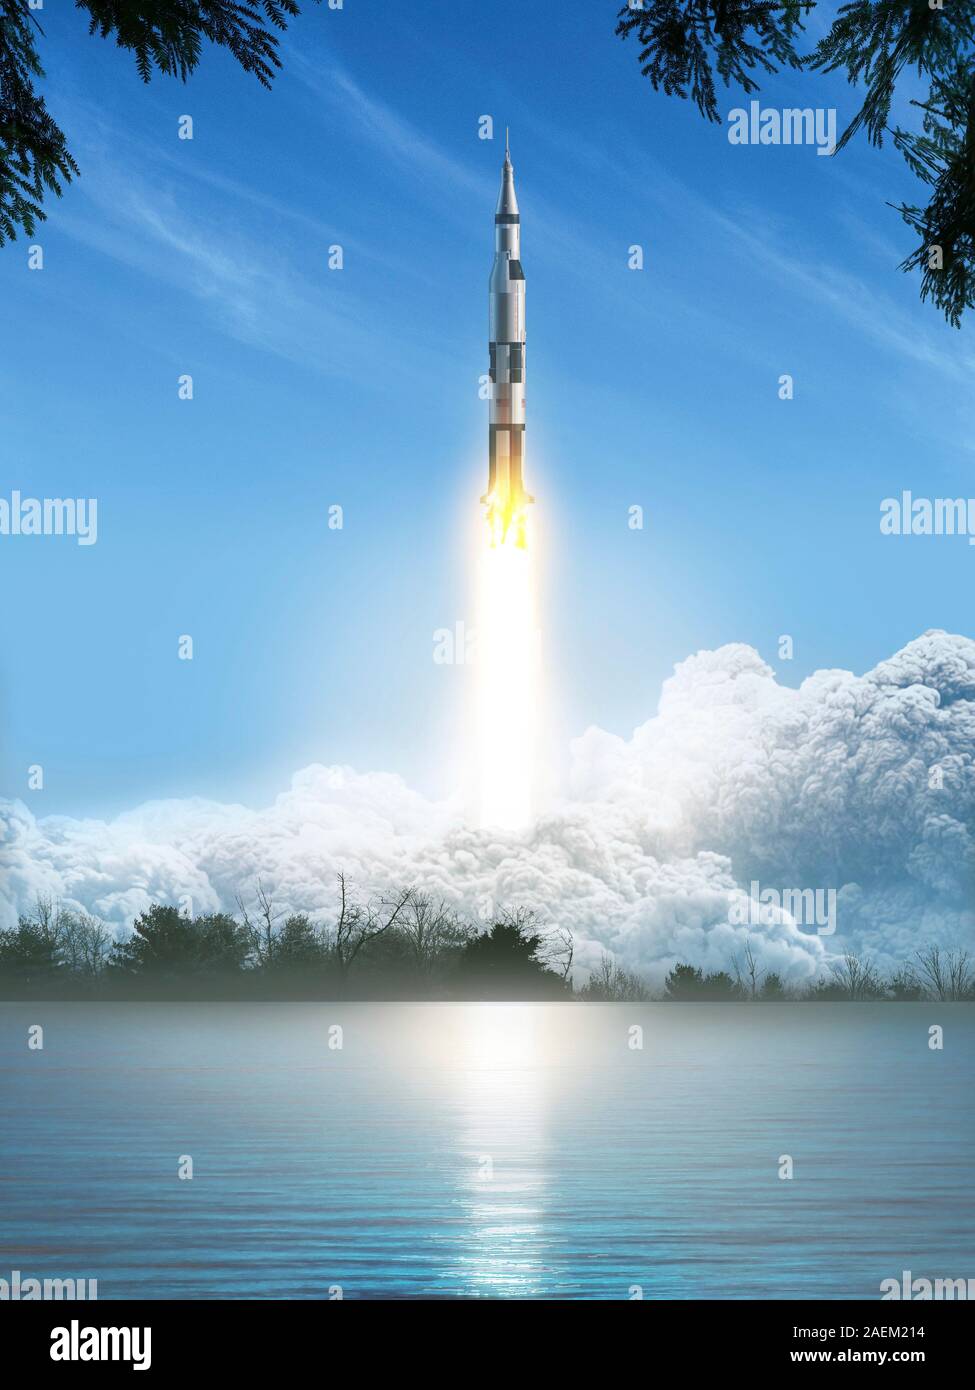 Saturn 5 rocket during launch, illustration Stock Photo